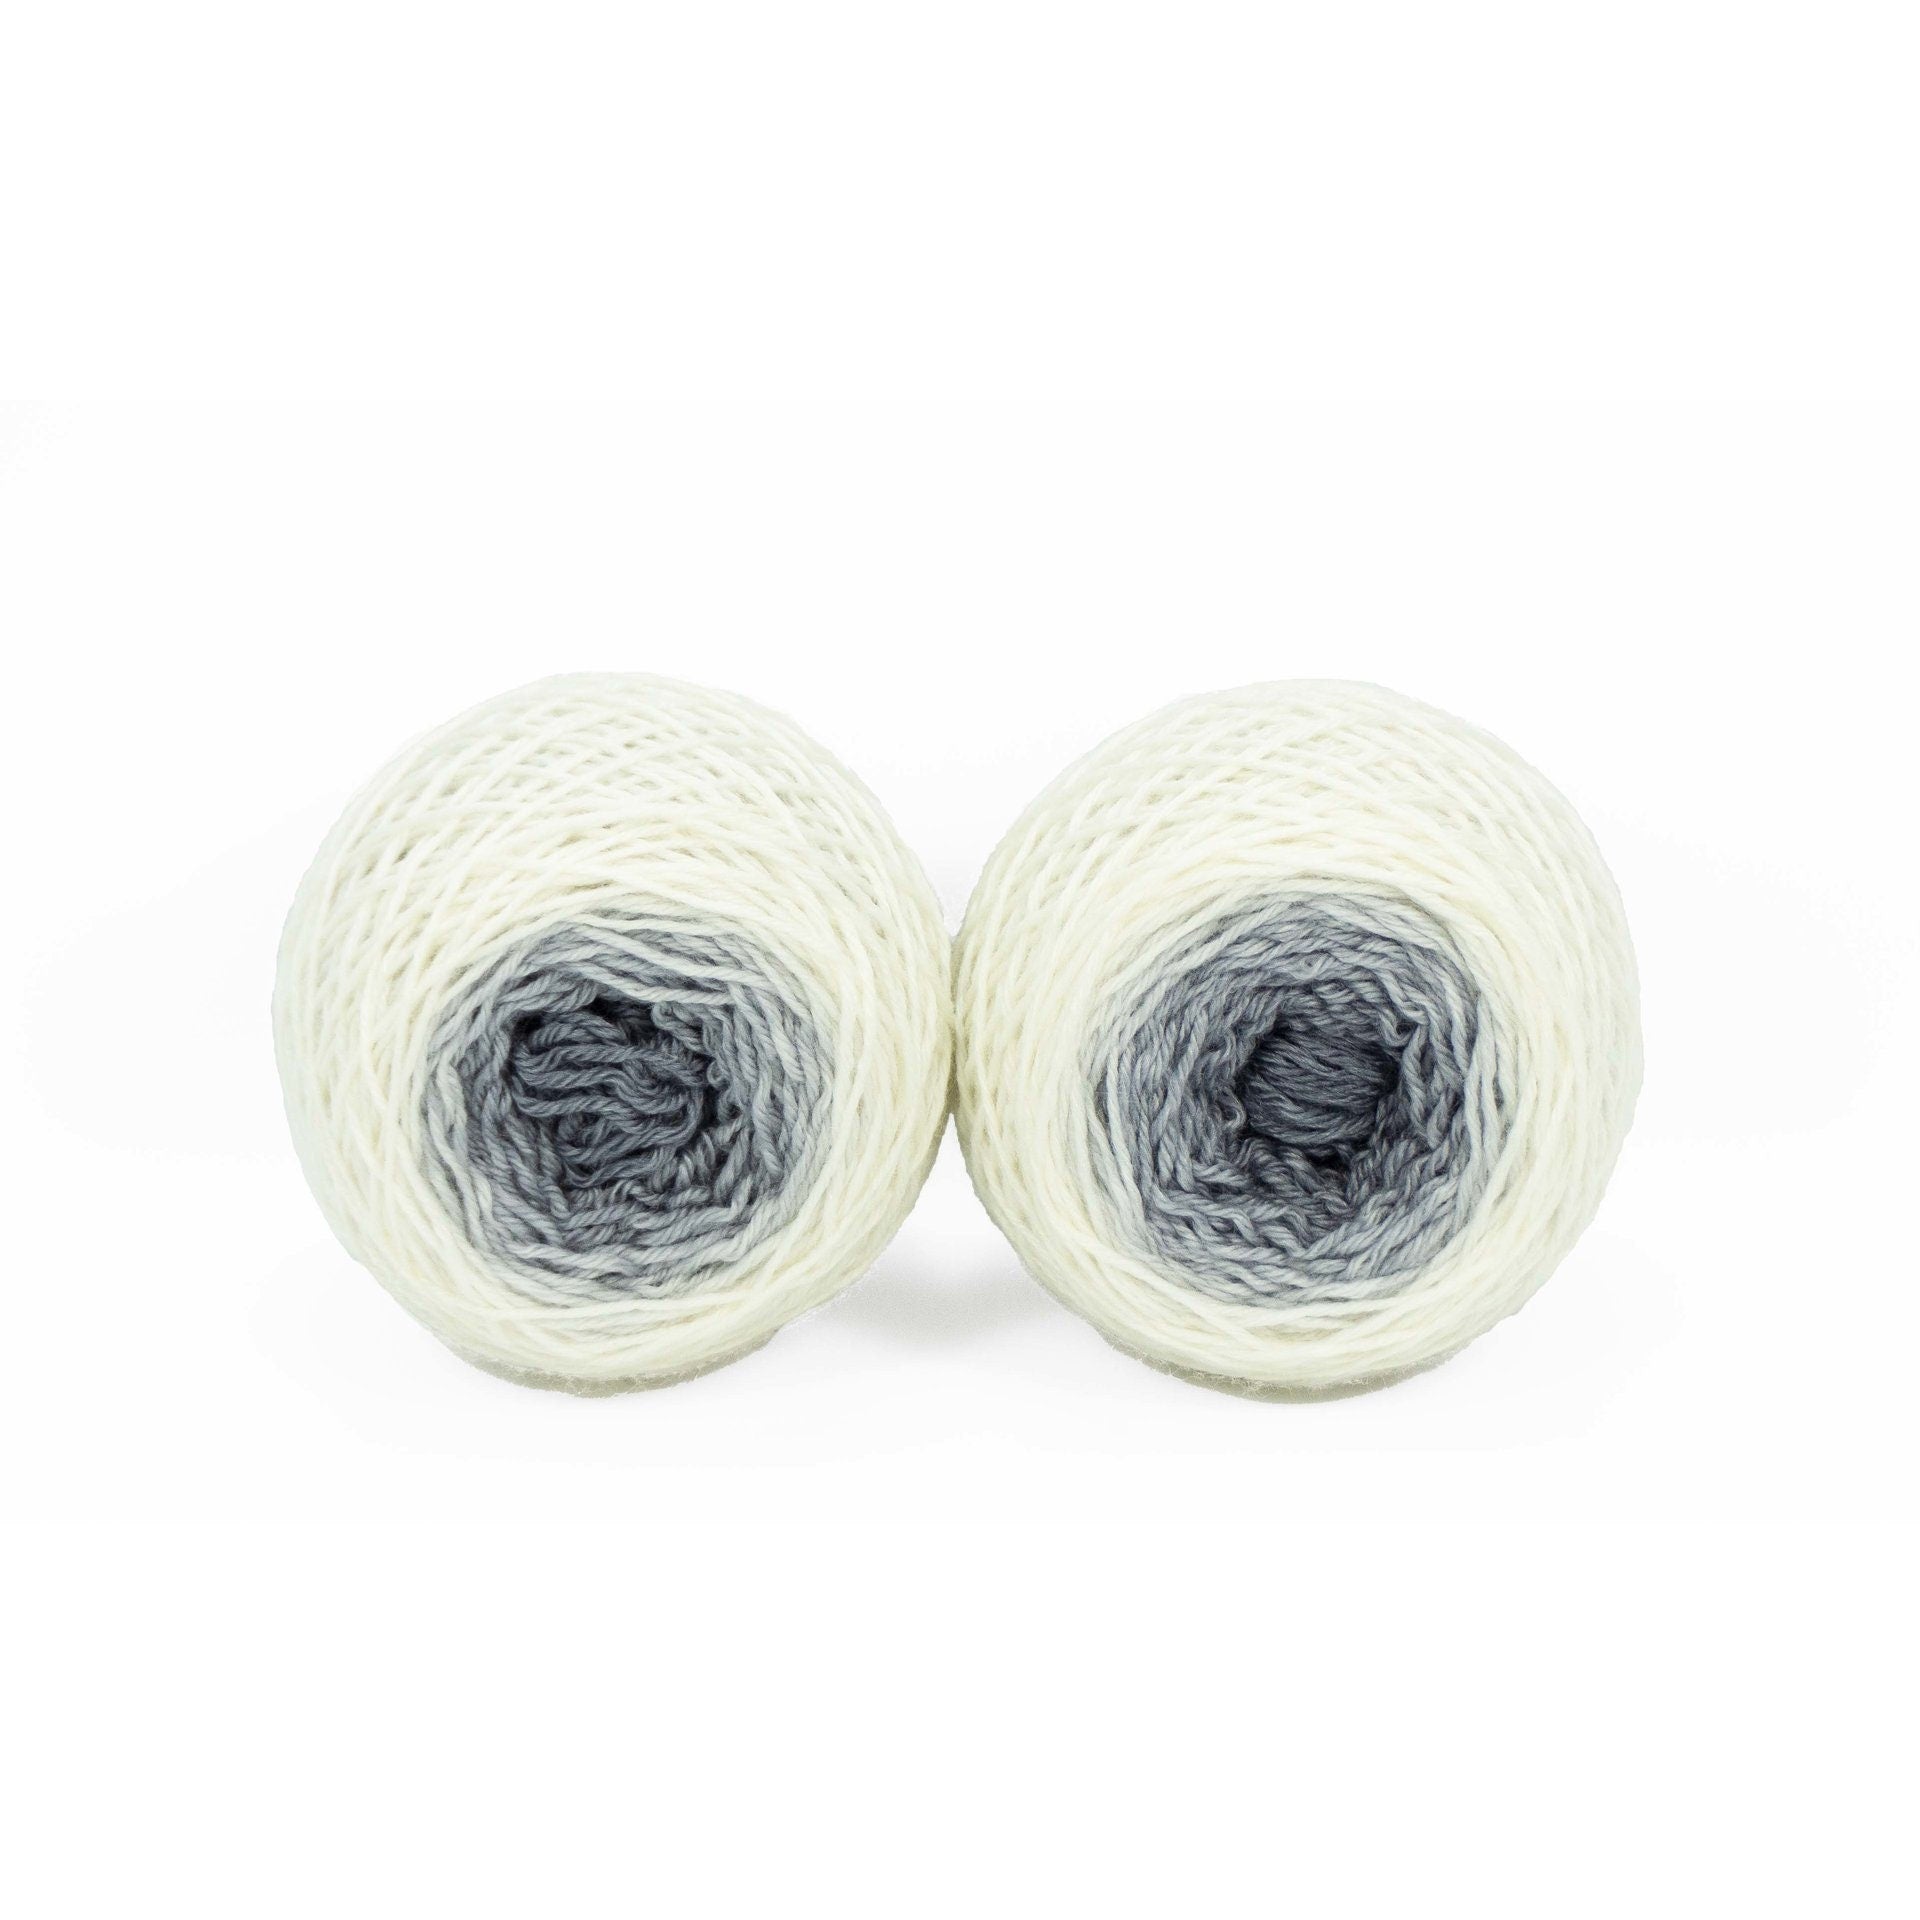 Sock Twins " Crone " - Lleaf SW Merino/Bamboo Handpainted Gradient Sock Yarn Set